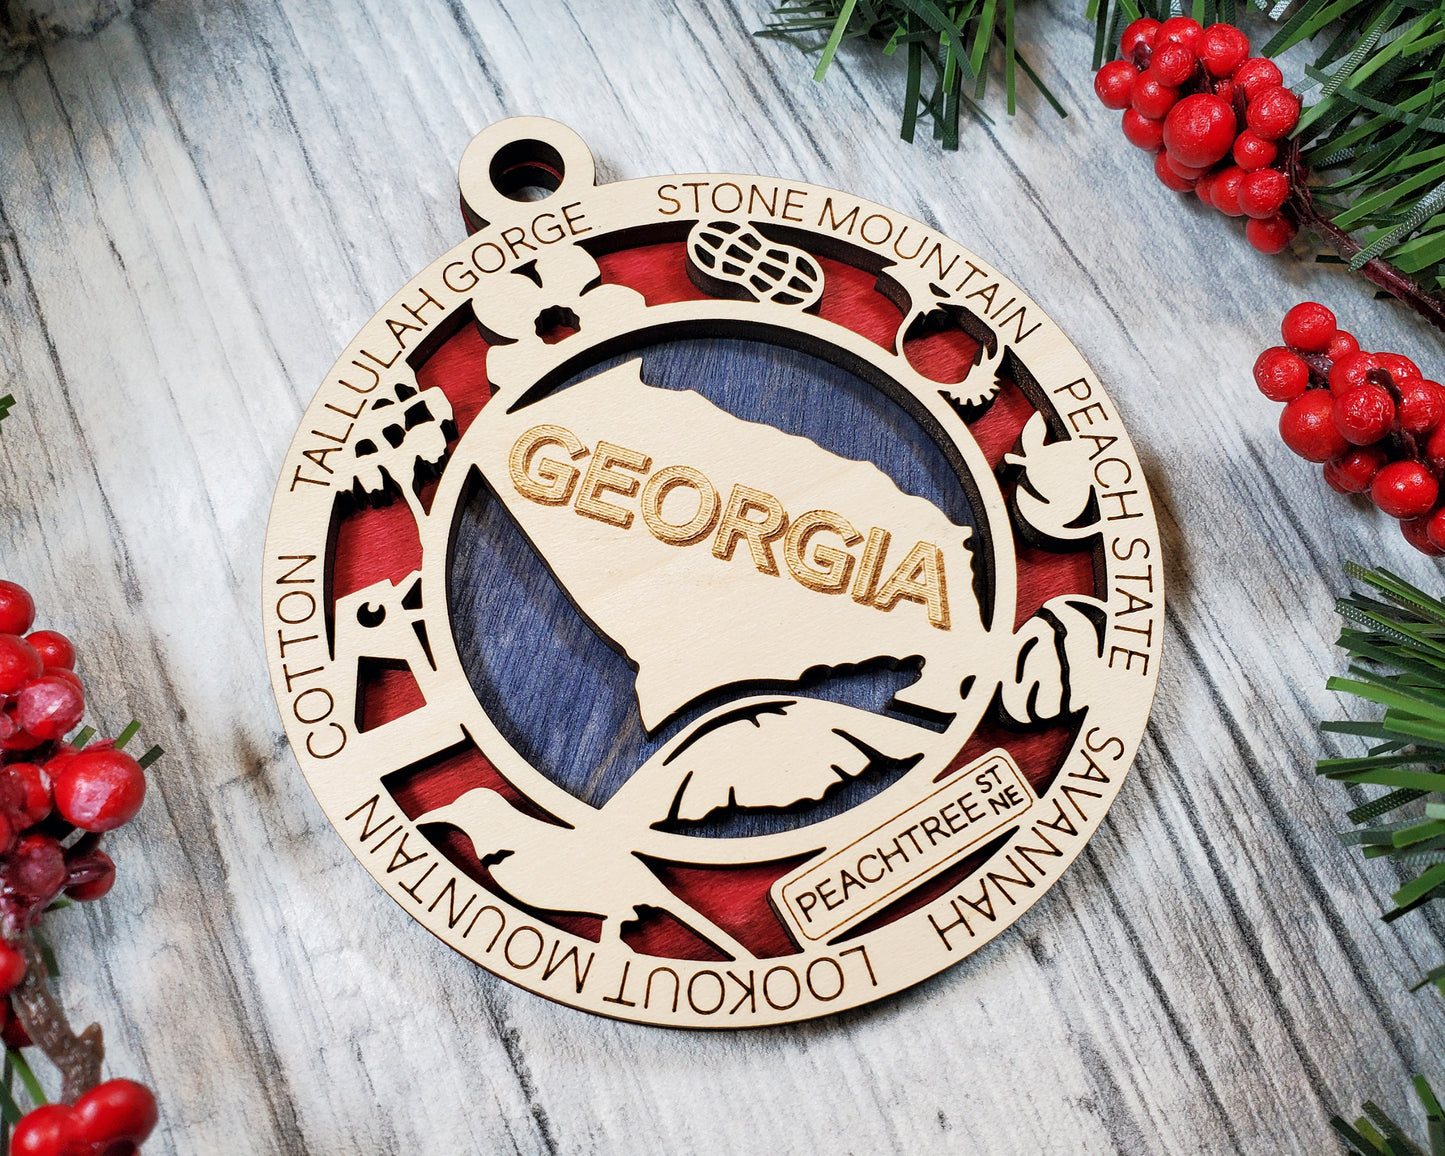 Georgia Ornament